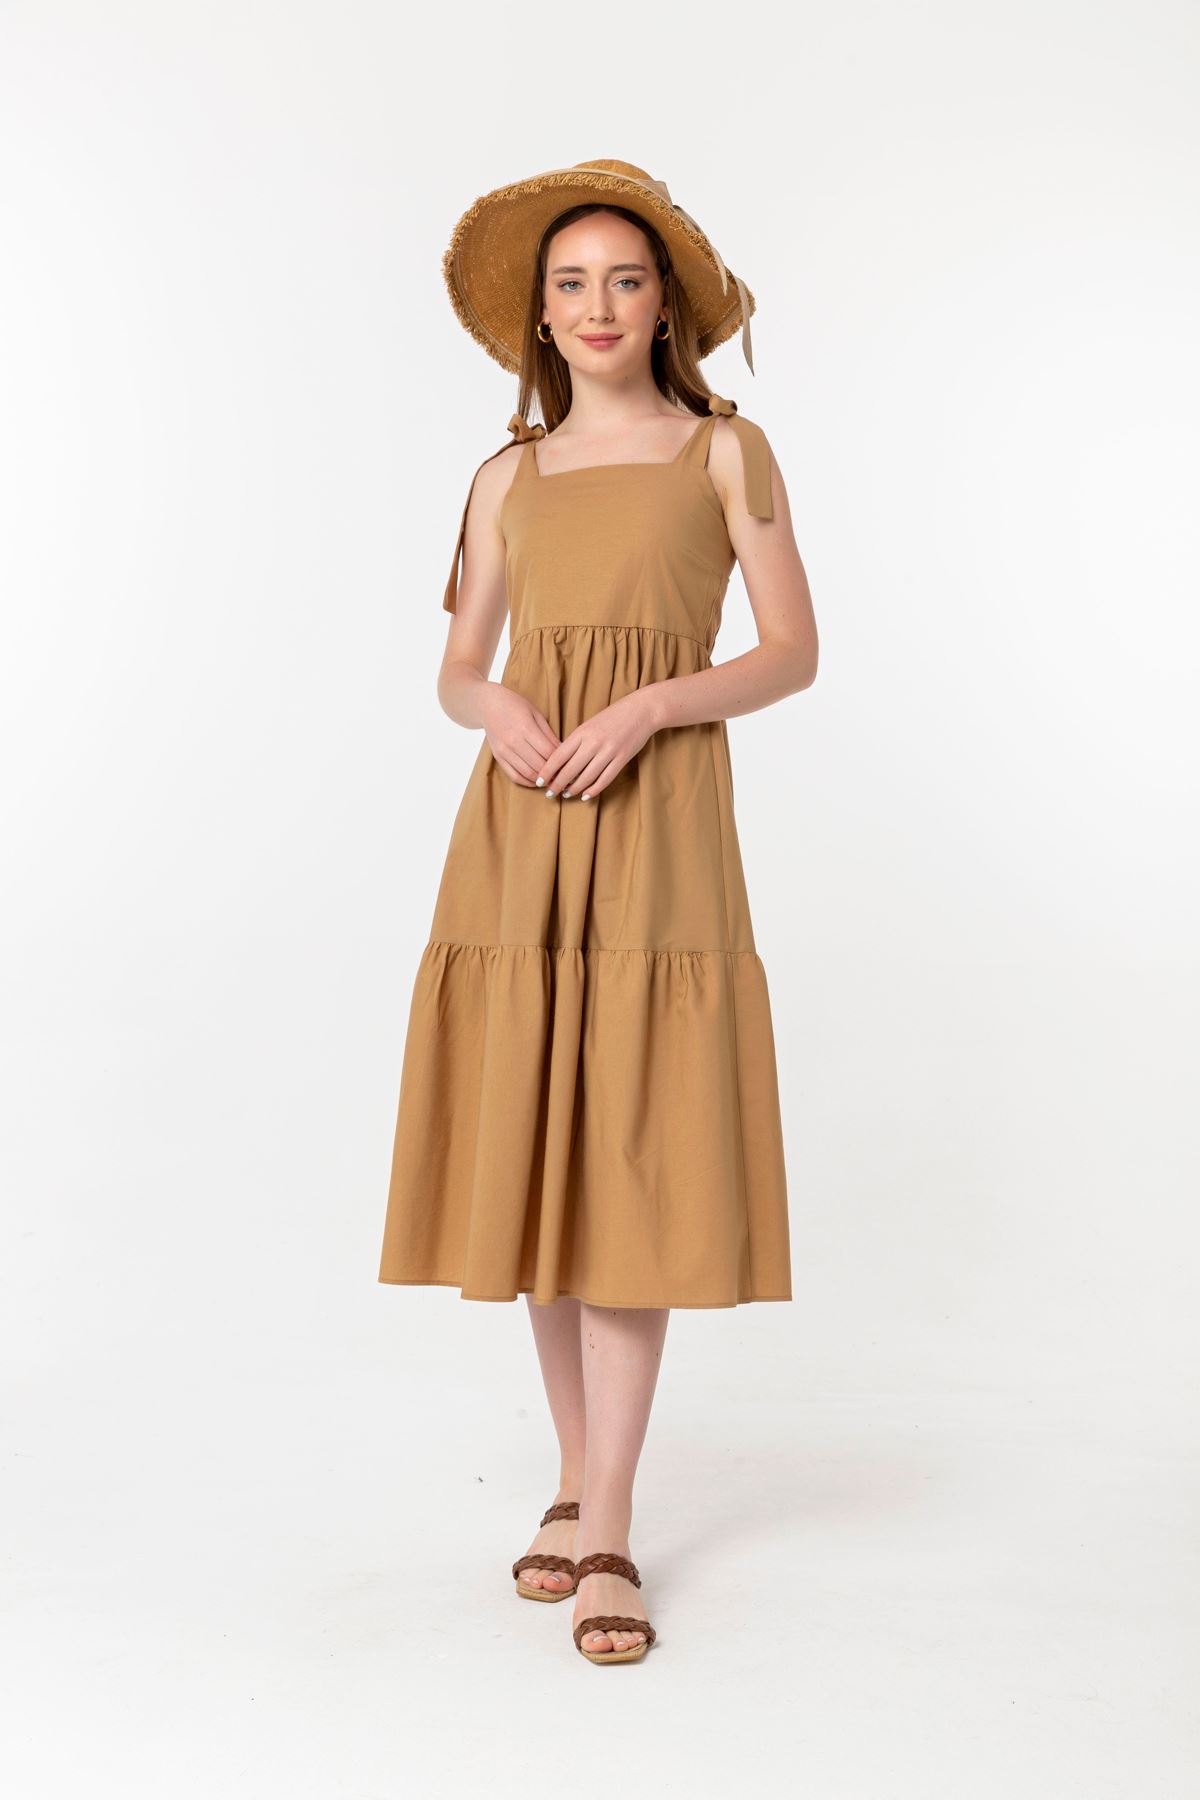 Soft Fabric Sleeveless Straped Shoulder Midi Long Women Dress - Light Brown